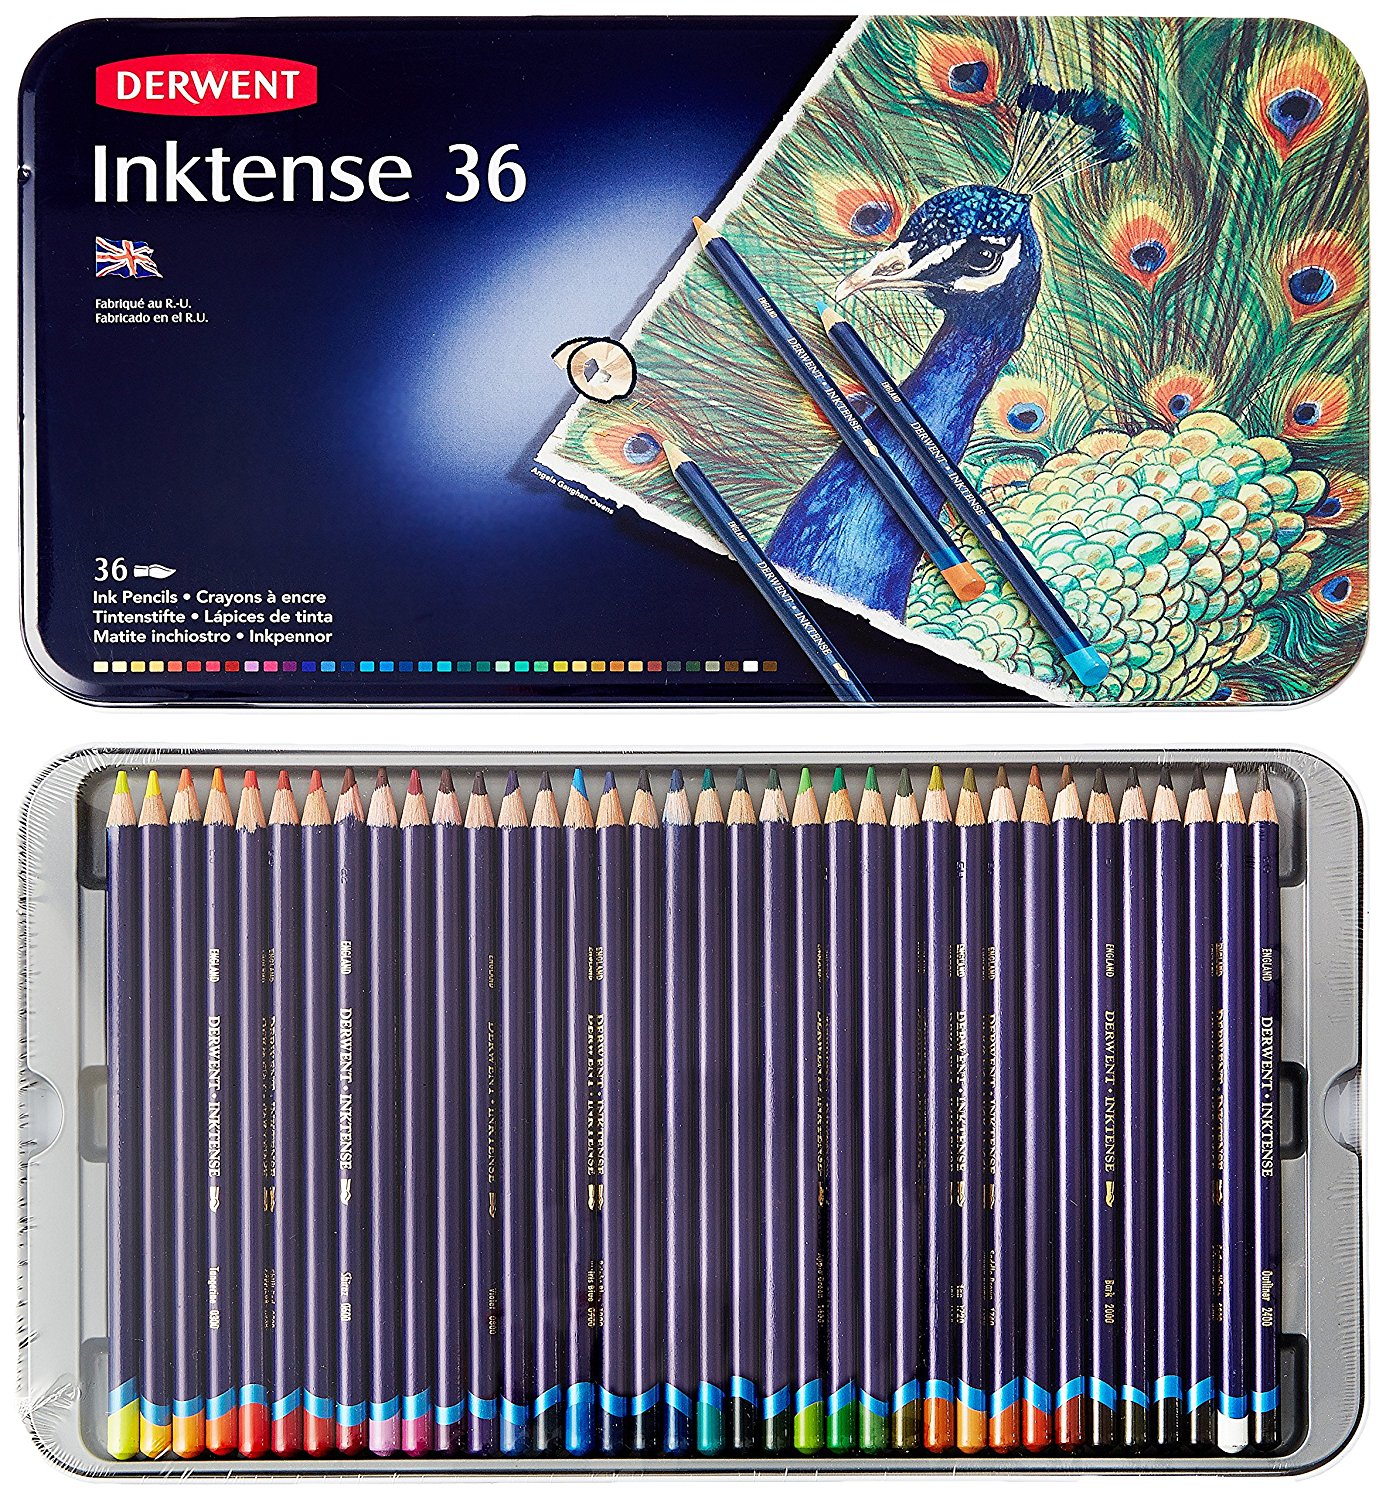 DEAL ALERT: Derwent Colored Pencils Inktense Ink Pencils, 36-Pack – 34% off!